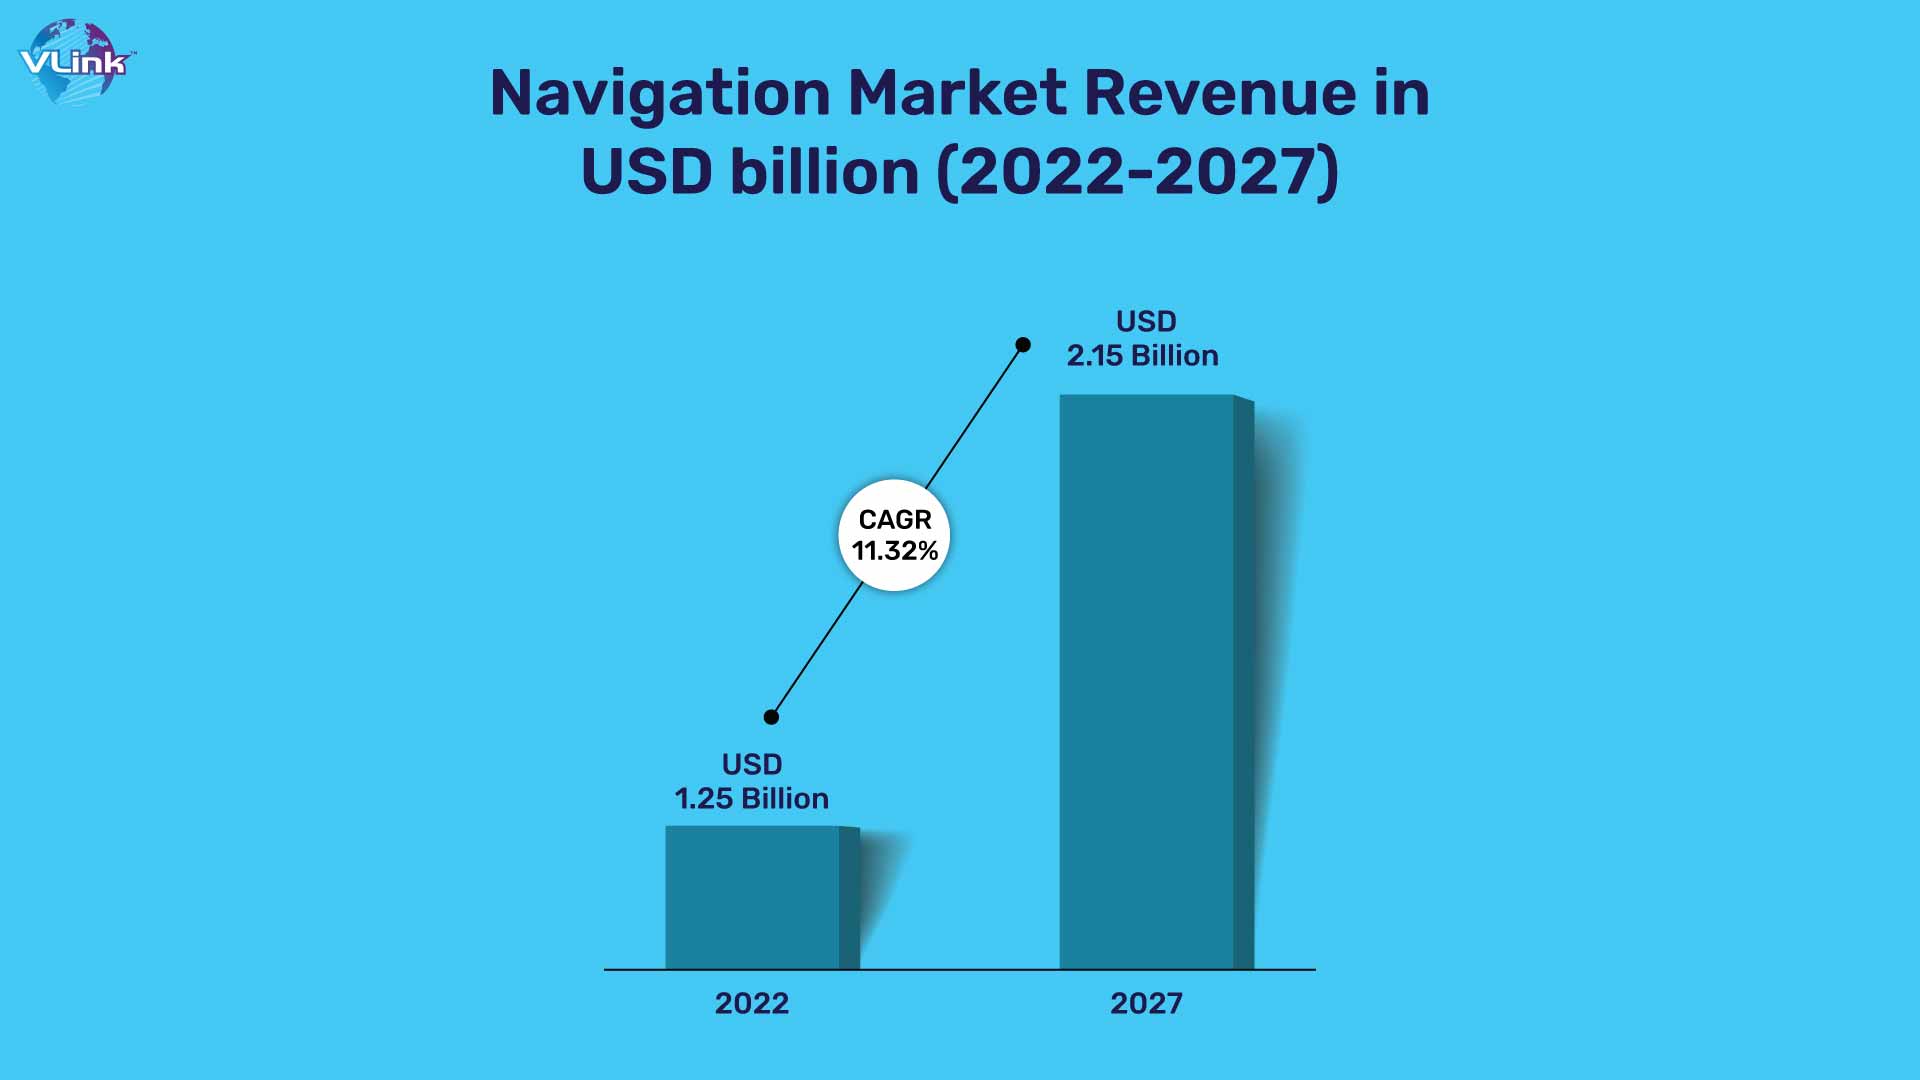 Total revenue in the Navigation market